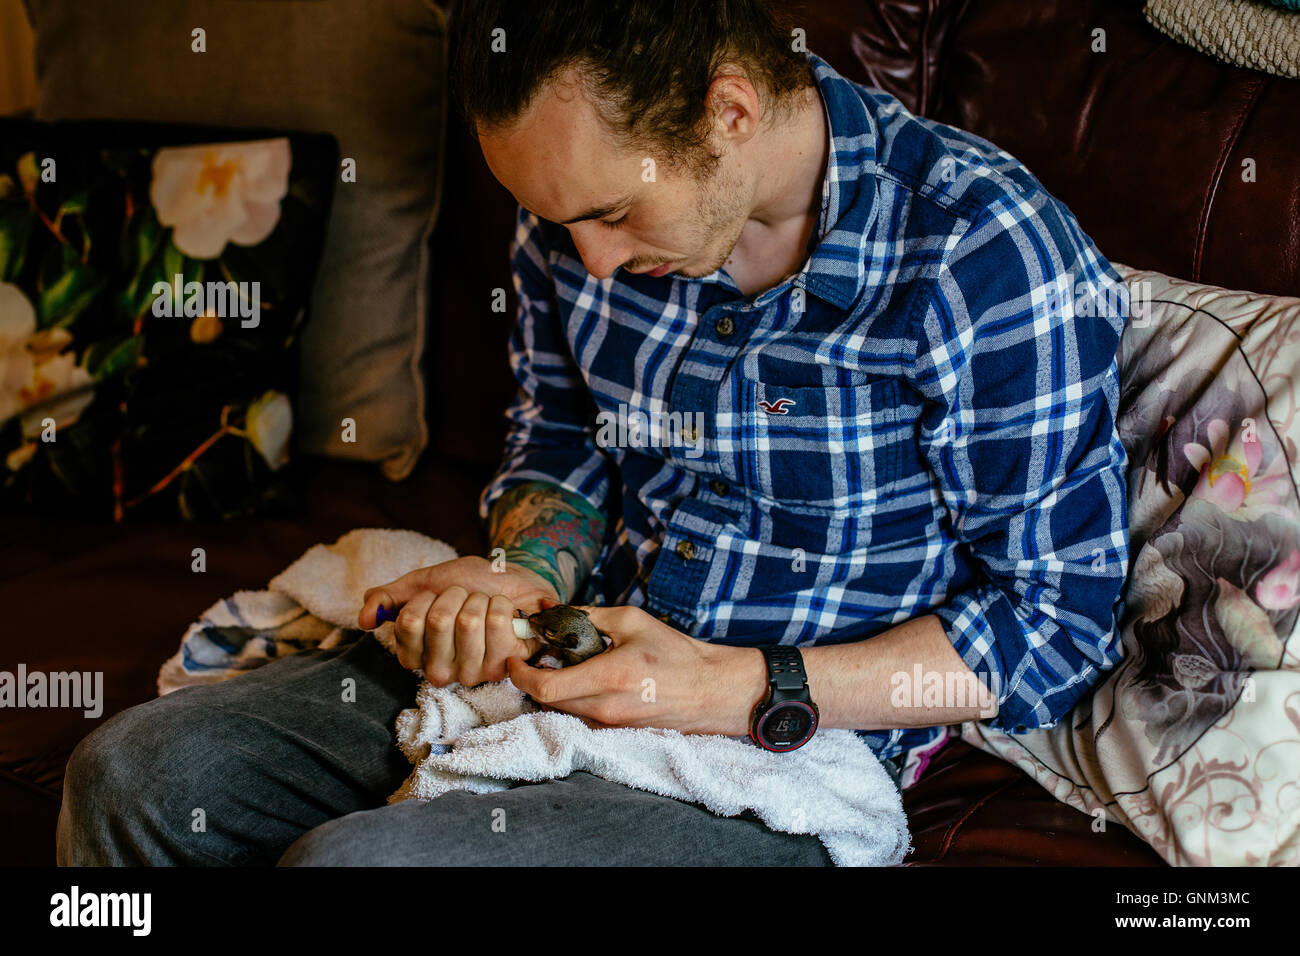 Man with tattoos feeding three week old baby squirrel Stock Photo